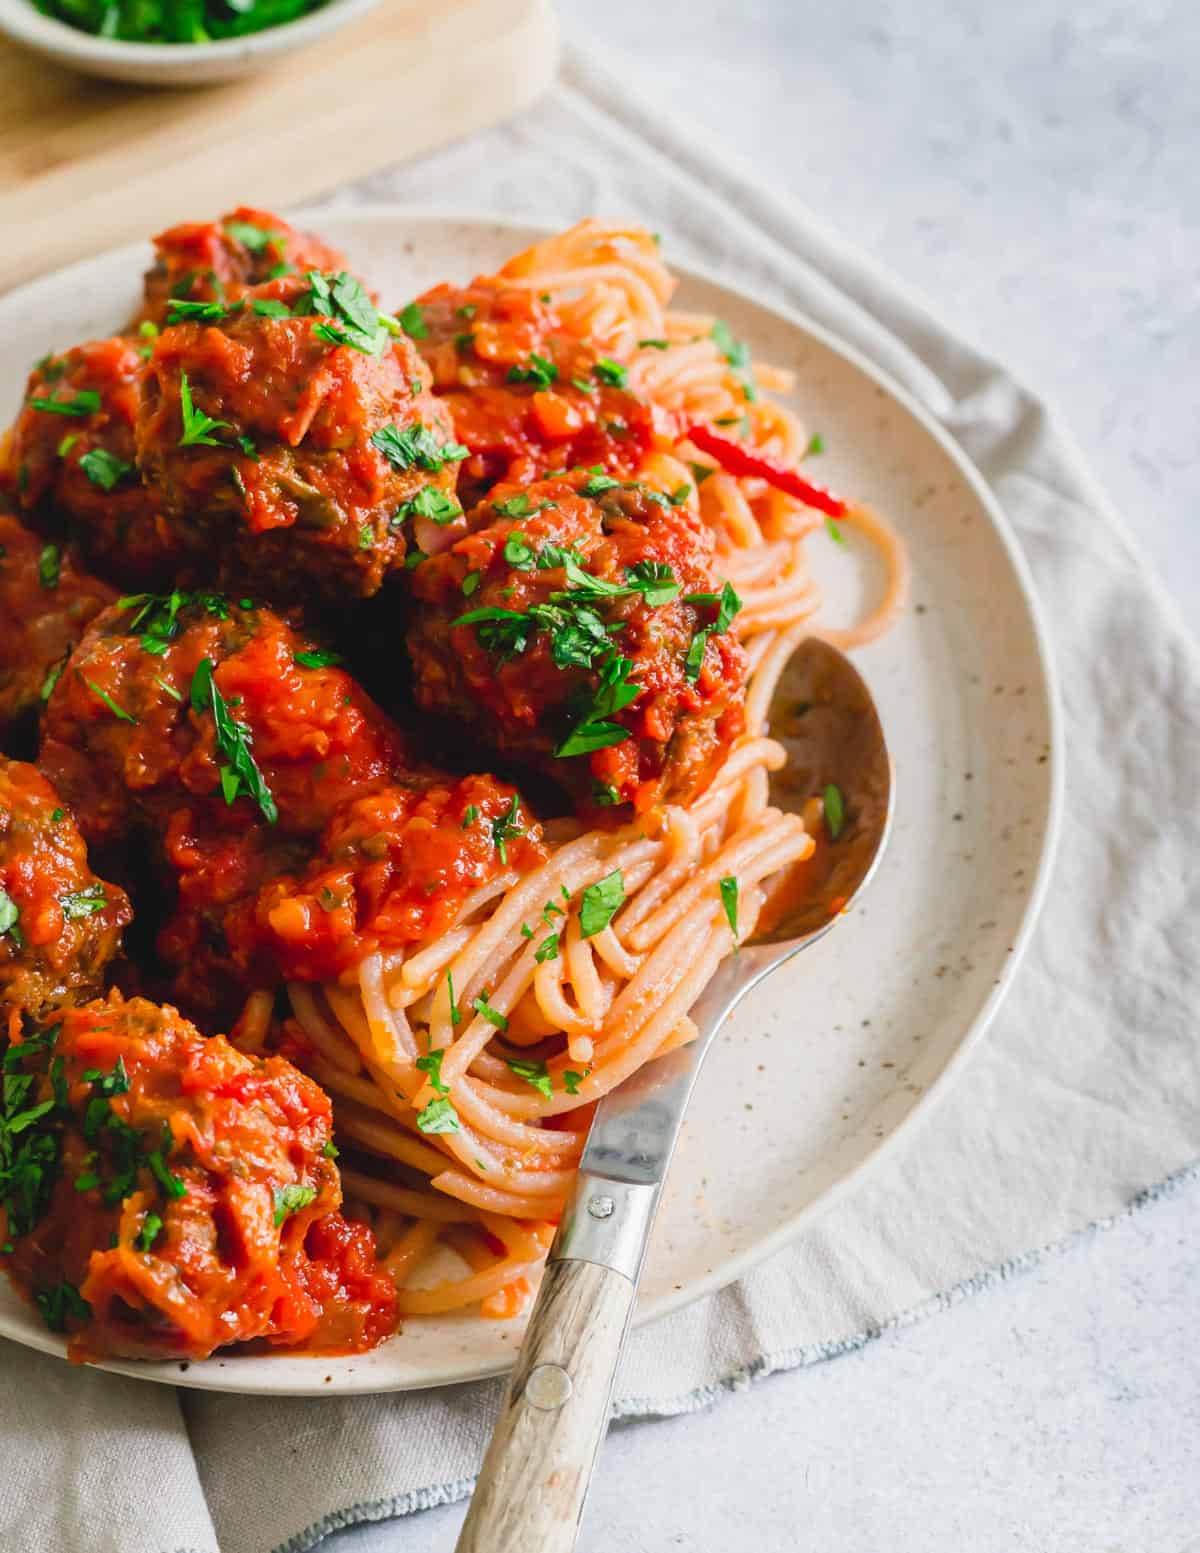 Tender, moist venison meatball recipe served with spaghetti.